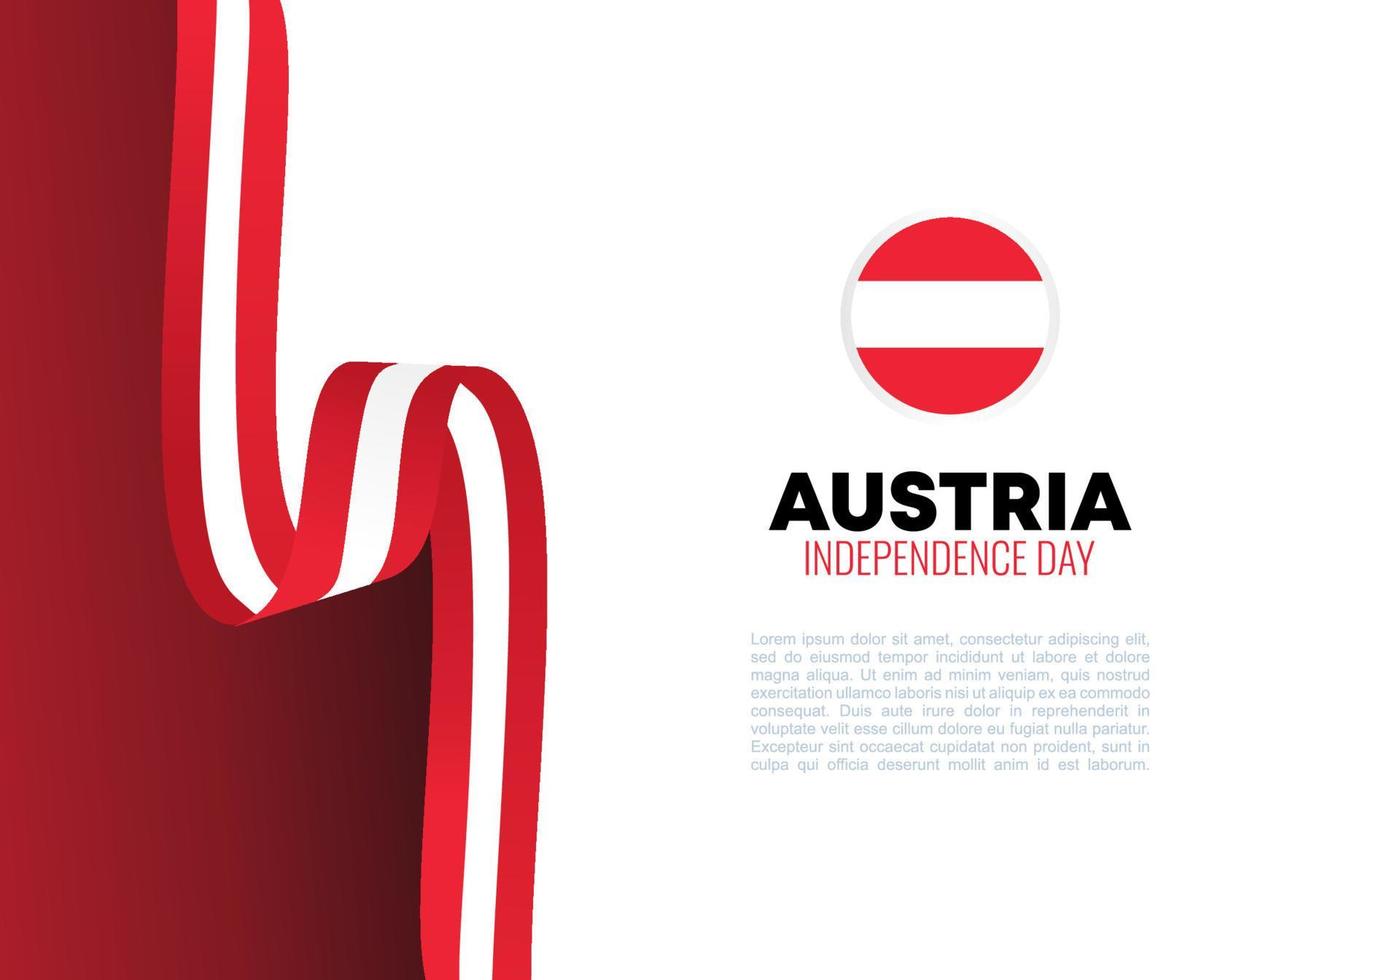 Austria independence day for national celebration on October 26. vector